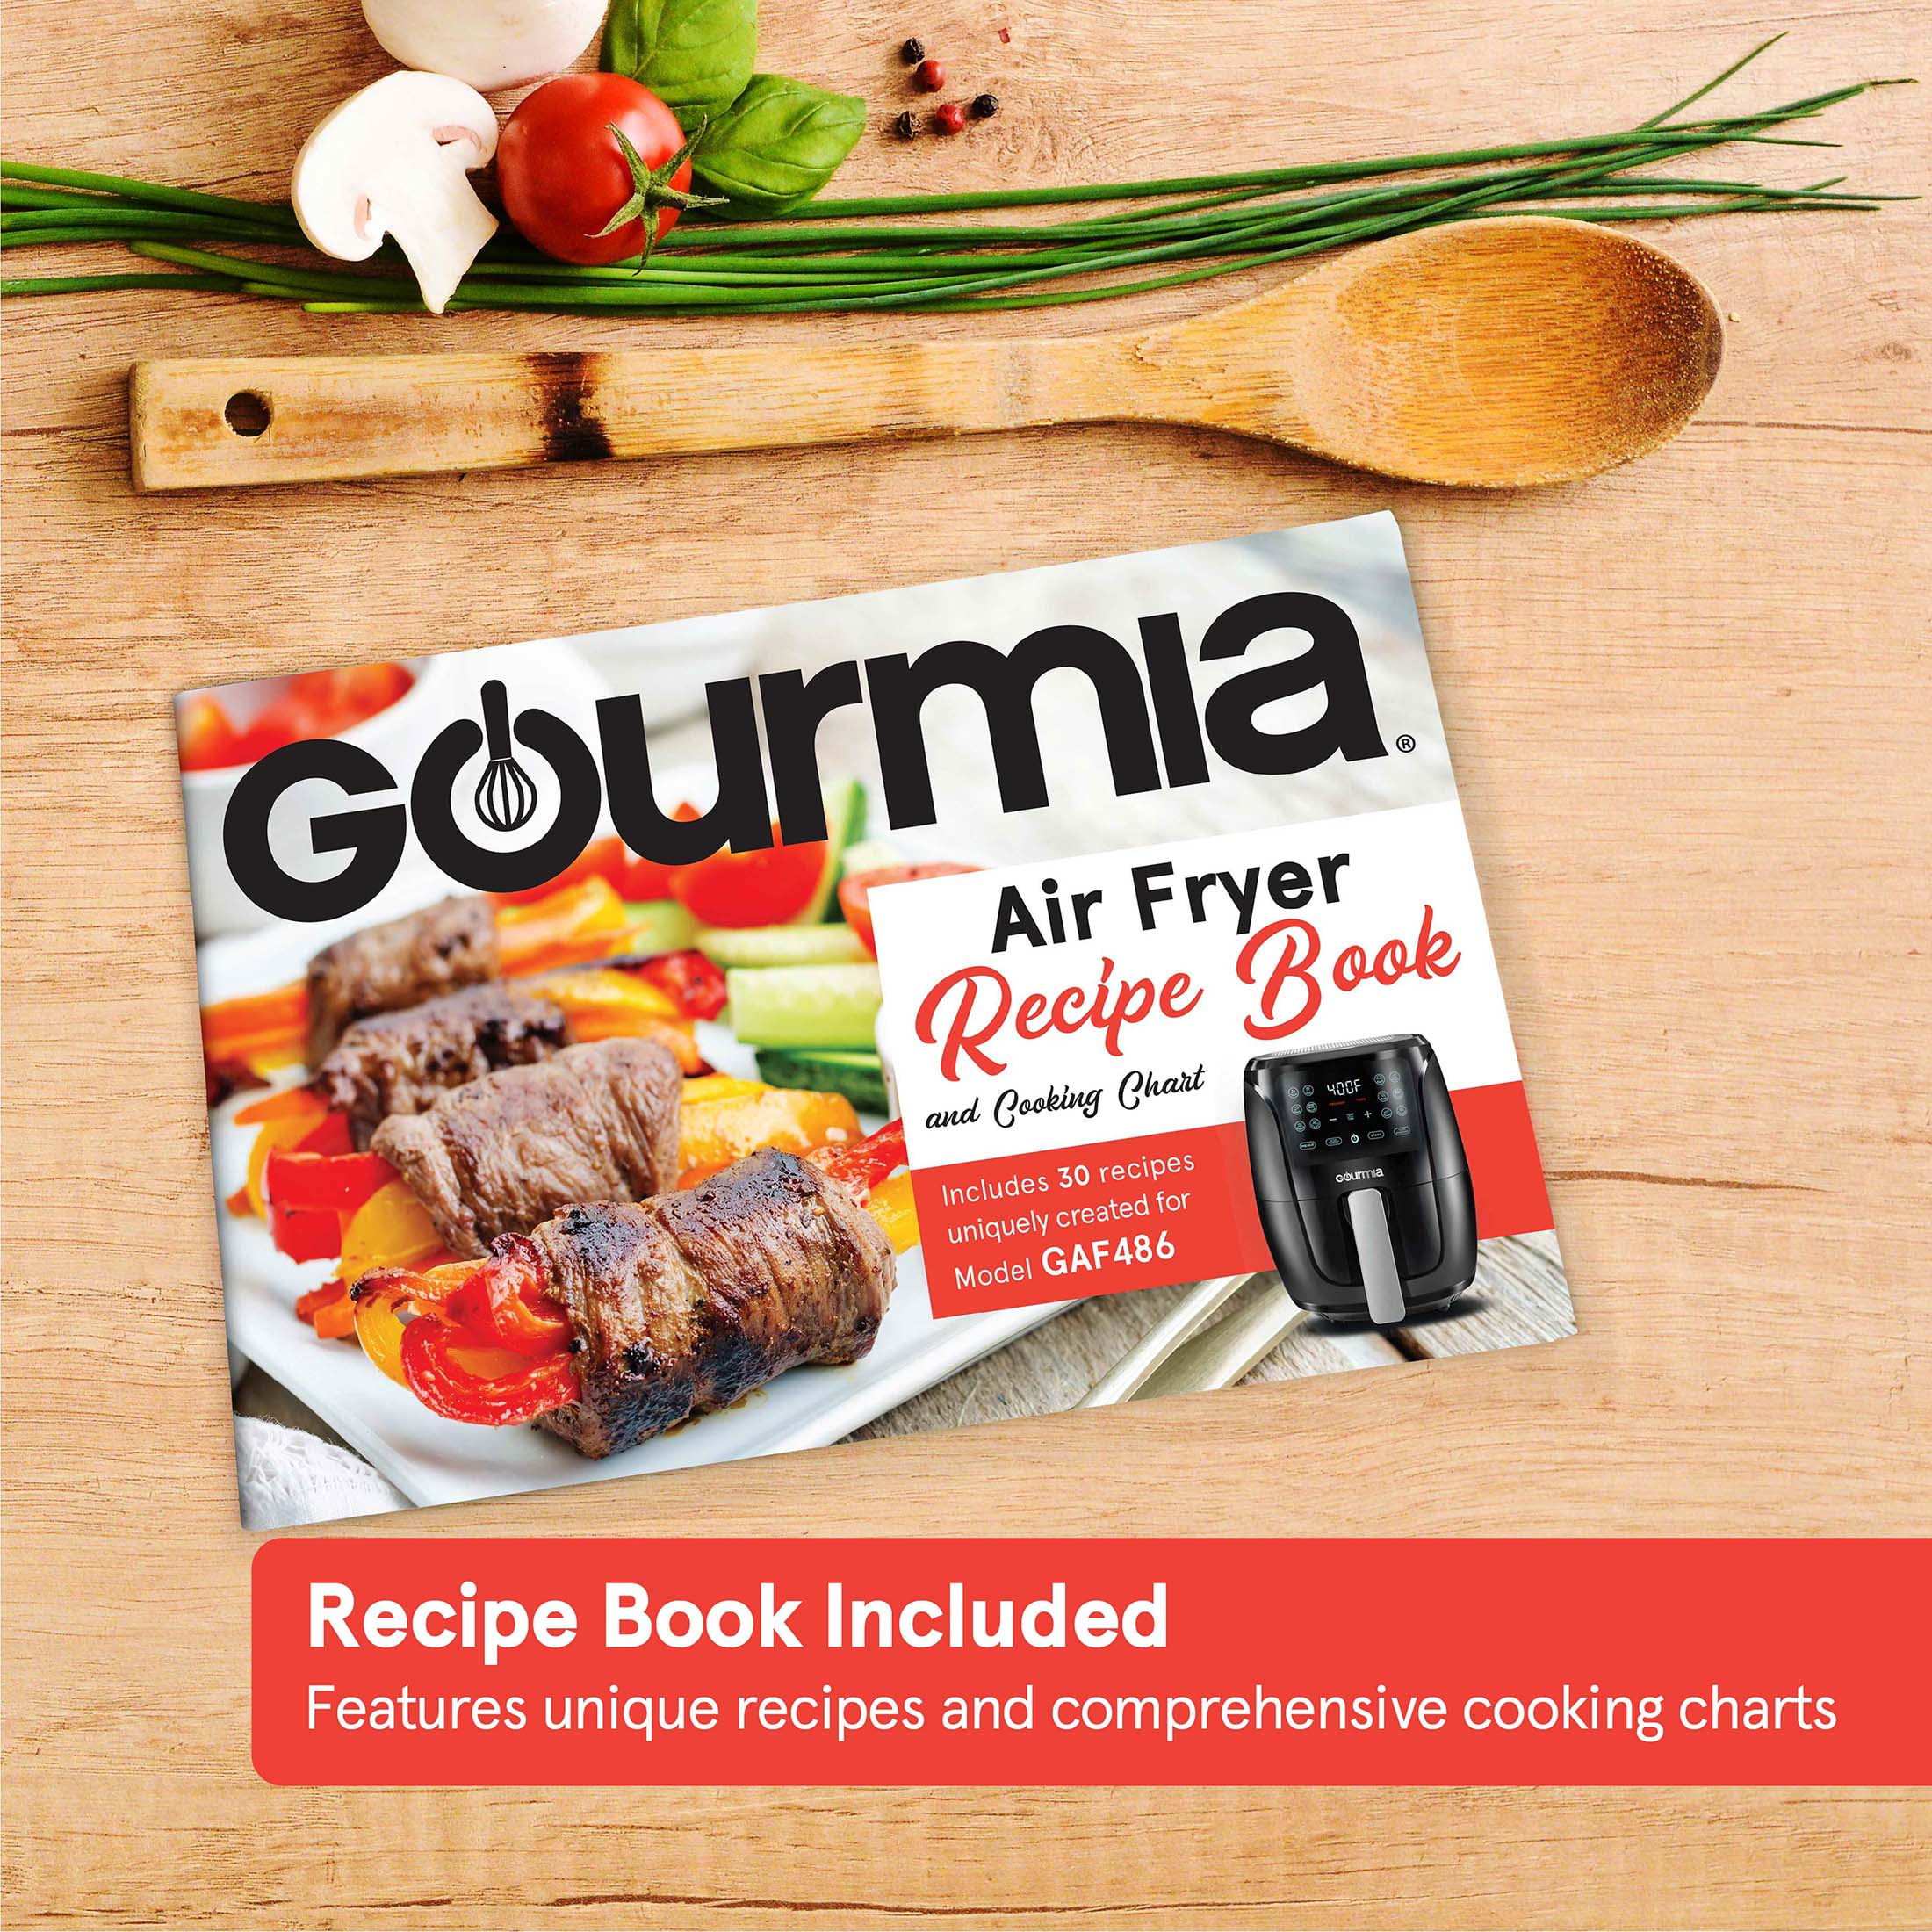 Gourmia 4-quart digital air fryer review